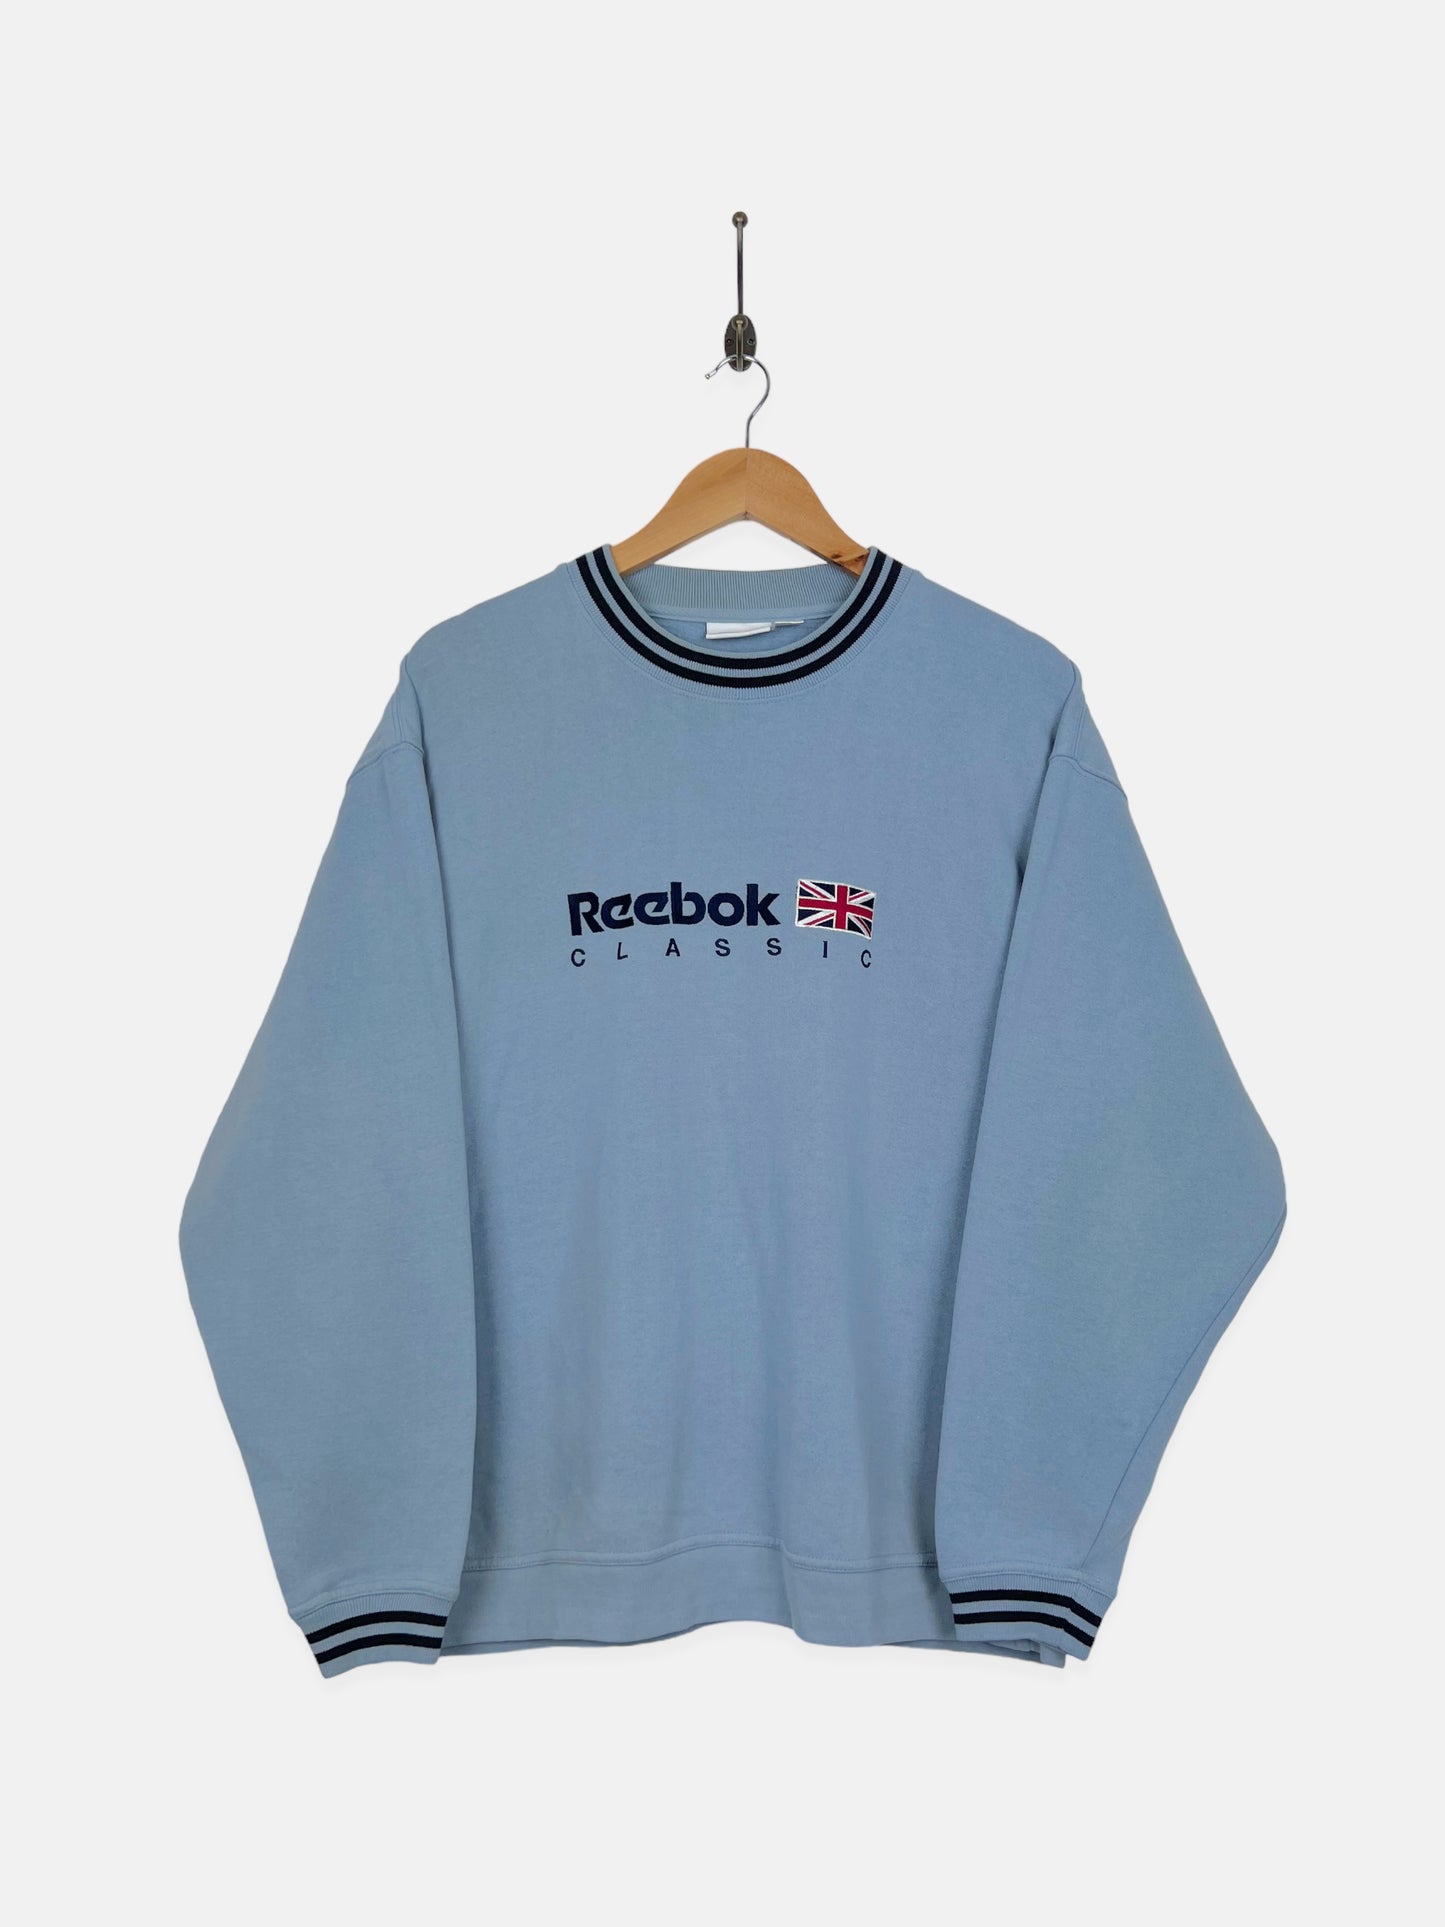 90's Reebok Classic Embroidered Vintage Sweatshirt Size M-L